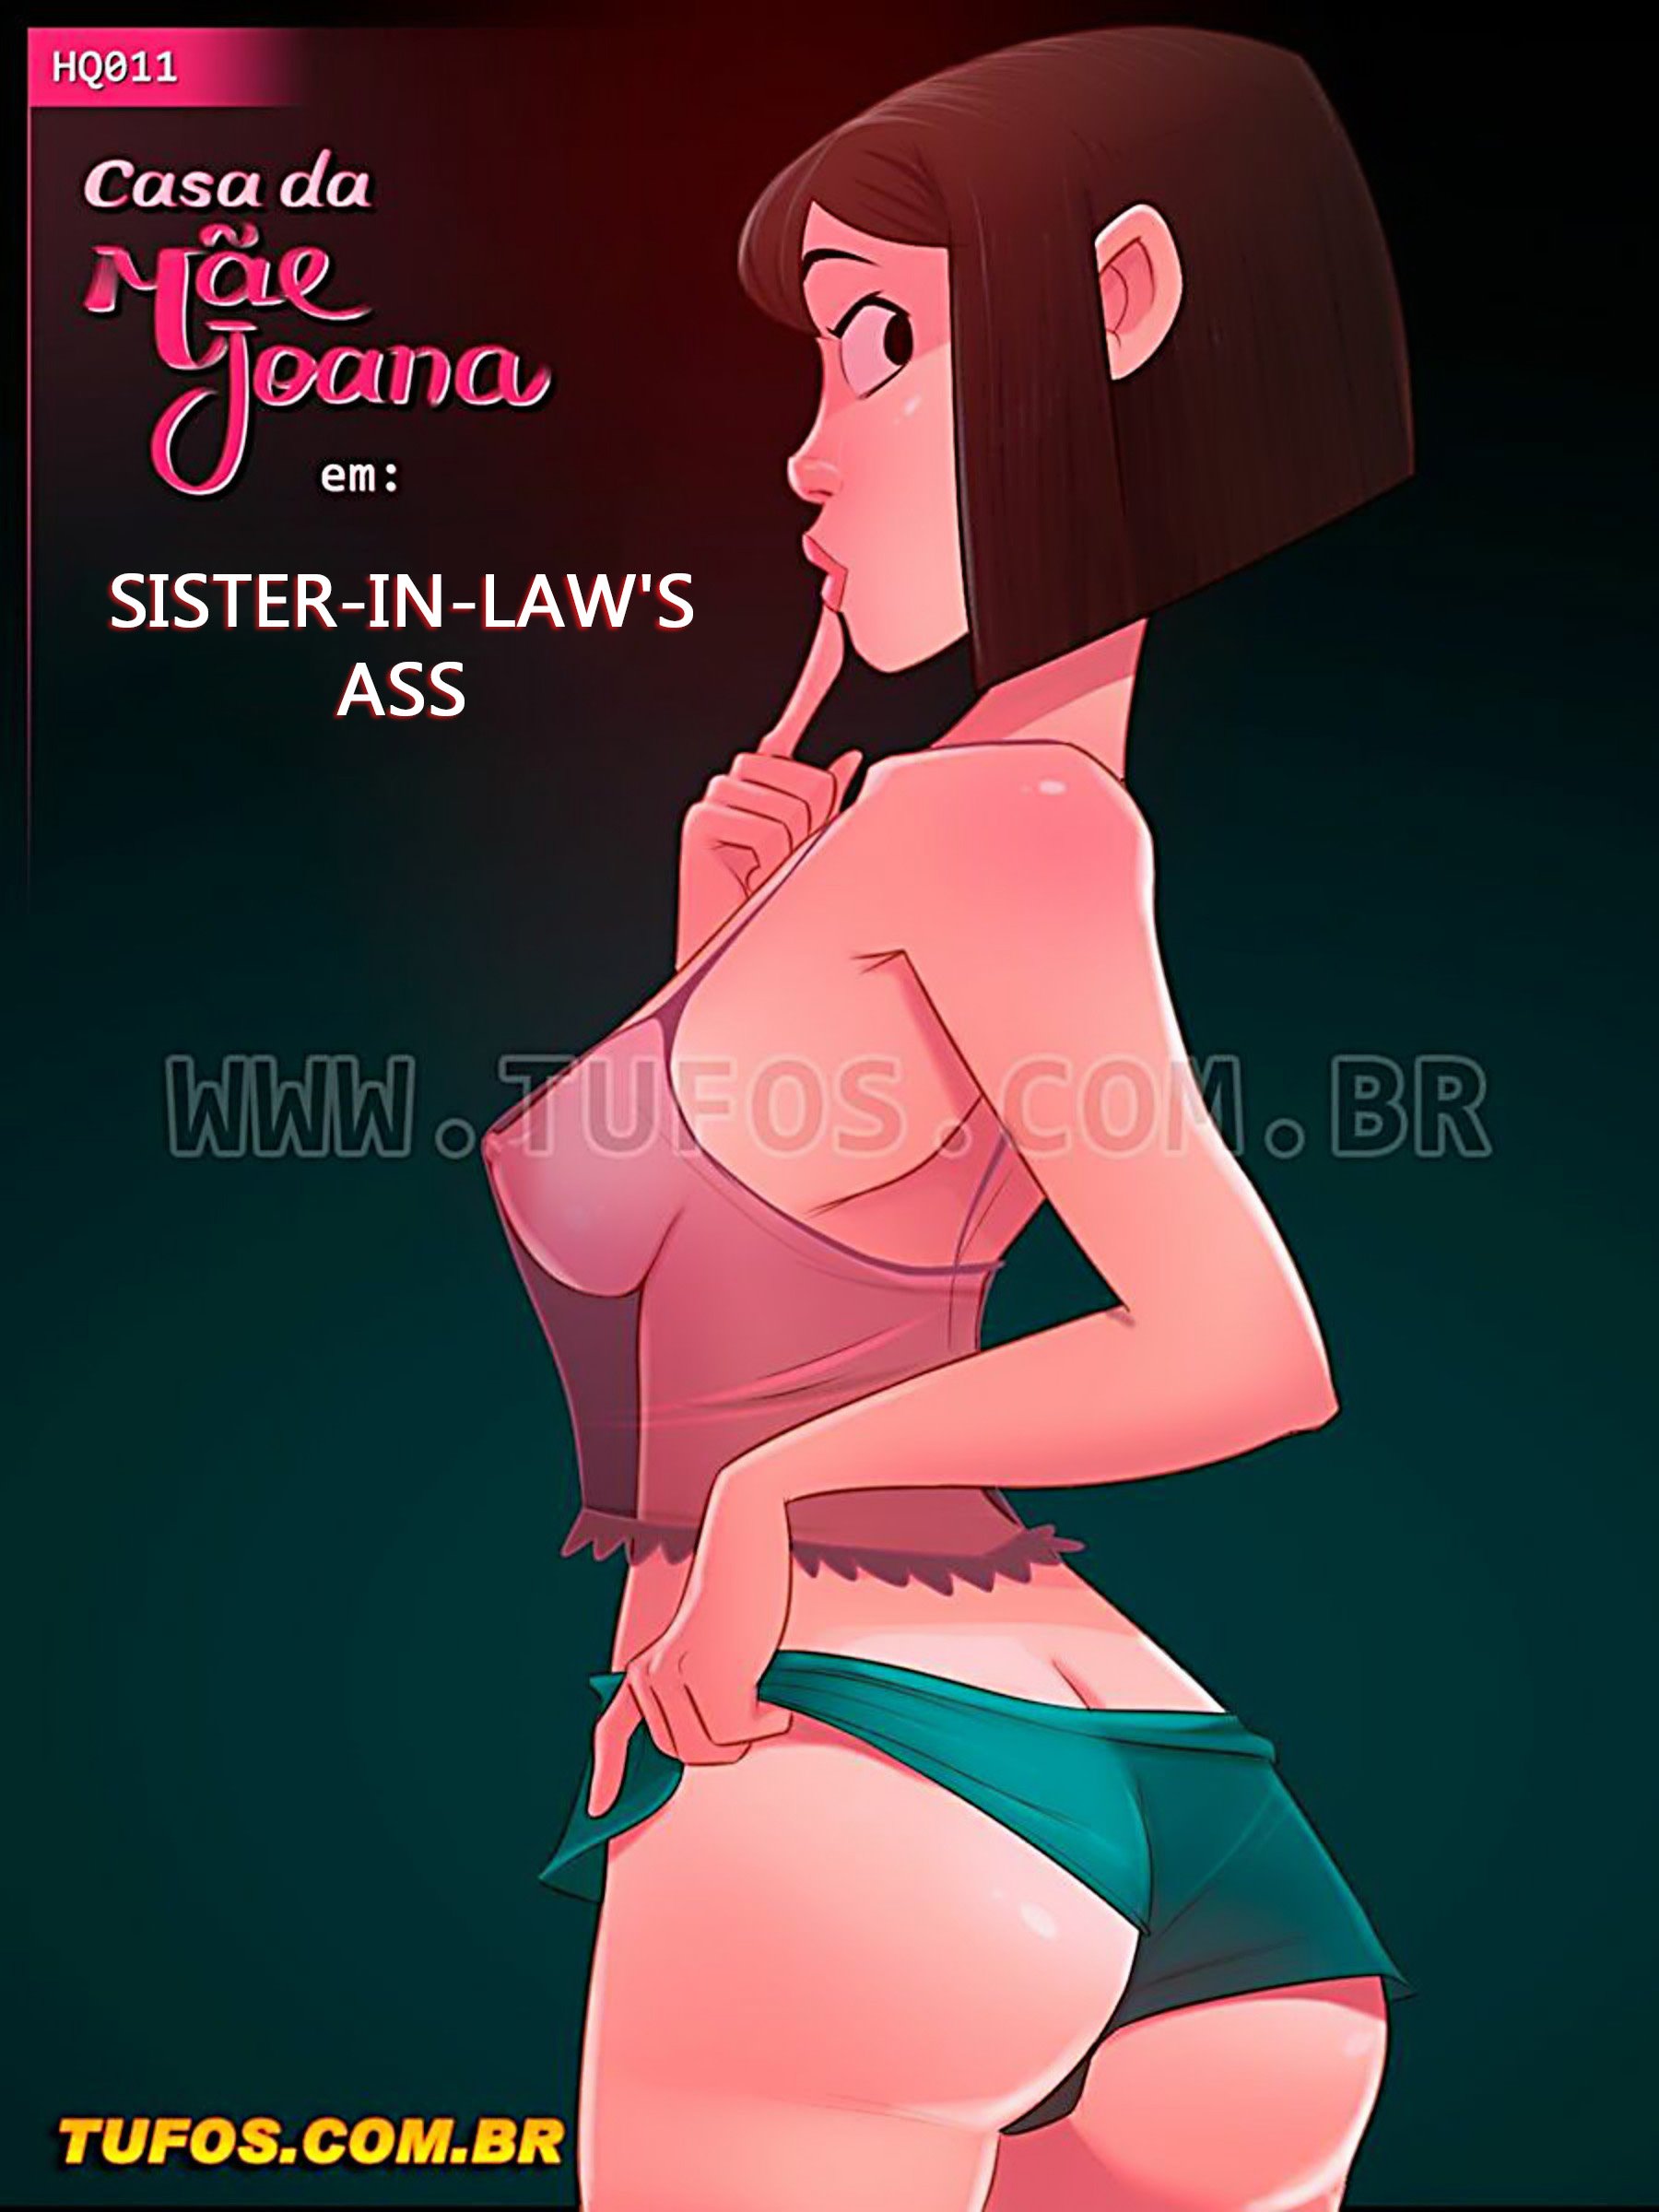 https://comicsarmy.com/wp-content/uploads/2021/11/big-ass-sister-Casa-da-mae-Joana-11-Sister-in-laws-Ass-tufos-[1-16].jpg